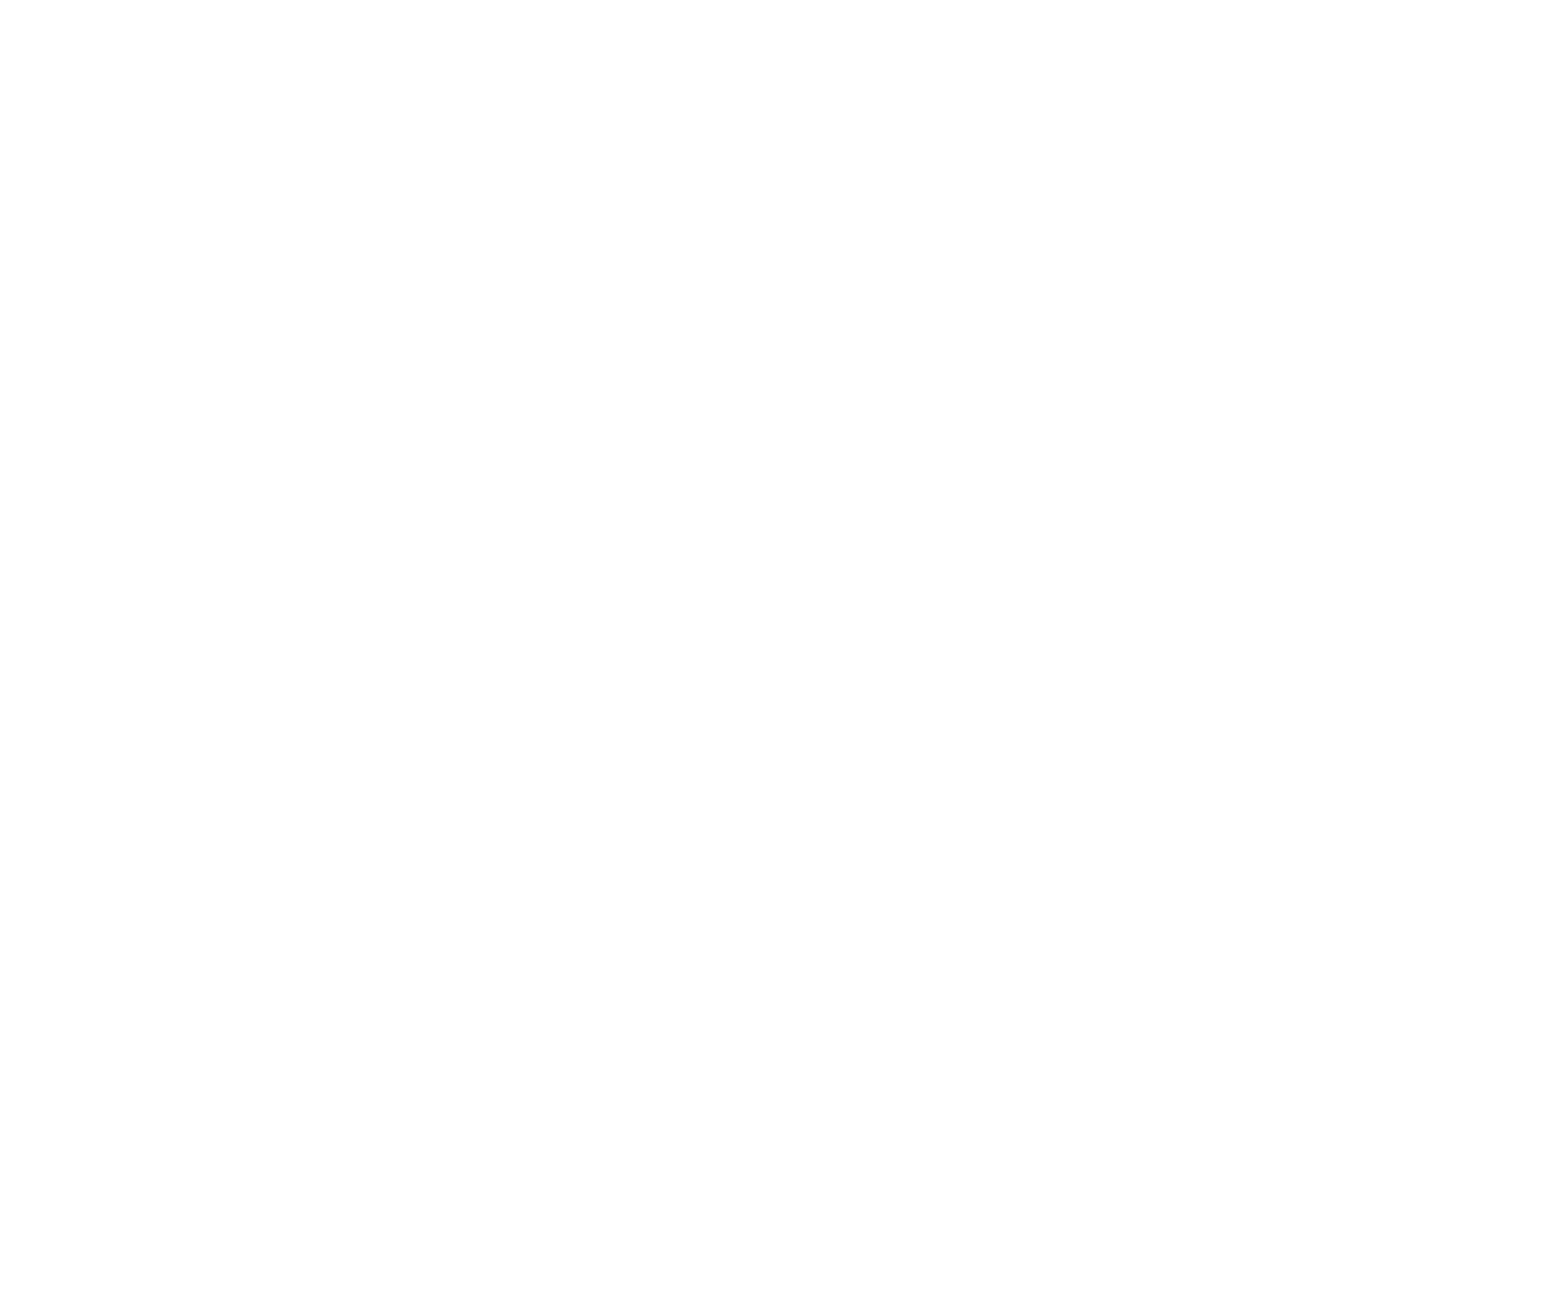 Emperor Watch & Jewellery logo pour fonds sombres (PNG transparent)